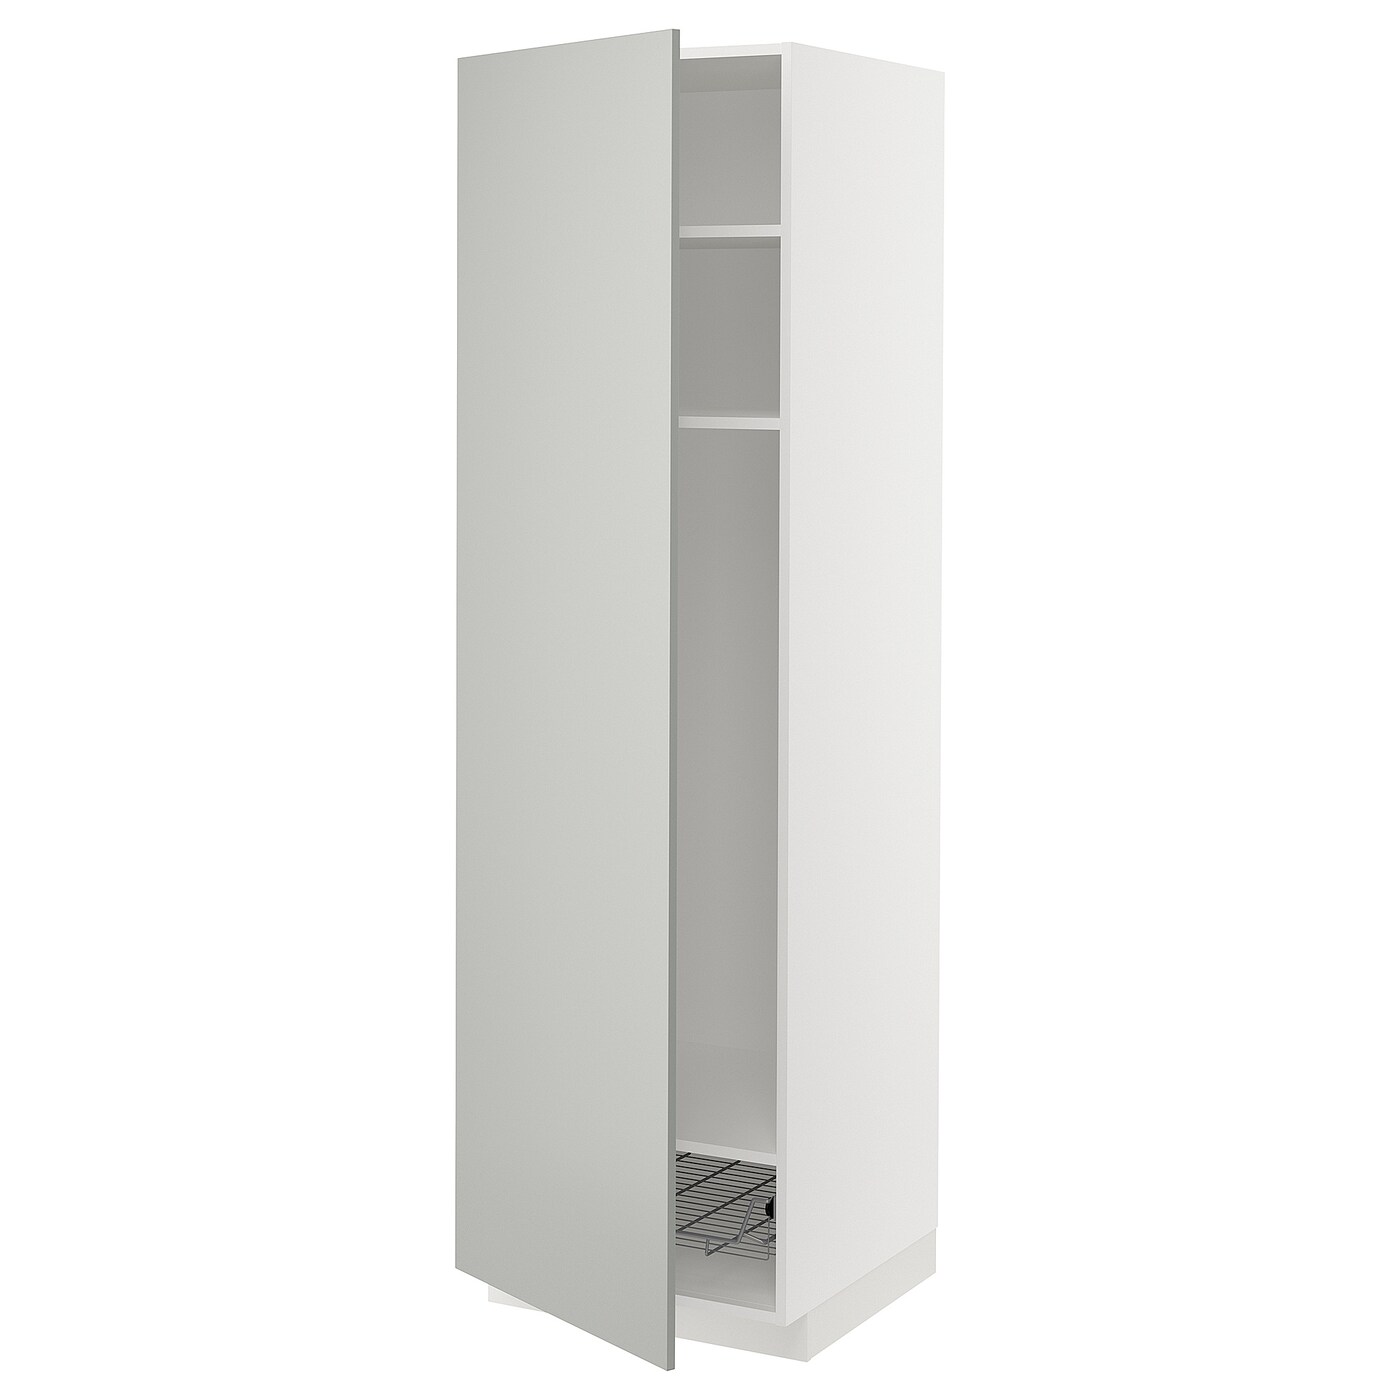 Высокий кухонный шкаф - IKEA METOD/МЕТОД ИКЕА, 200х60х60 см, белый/серый